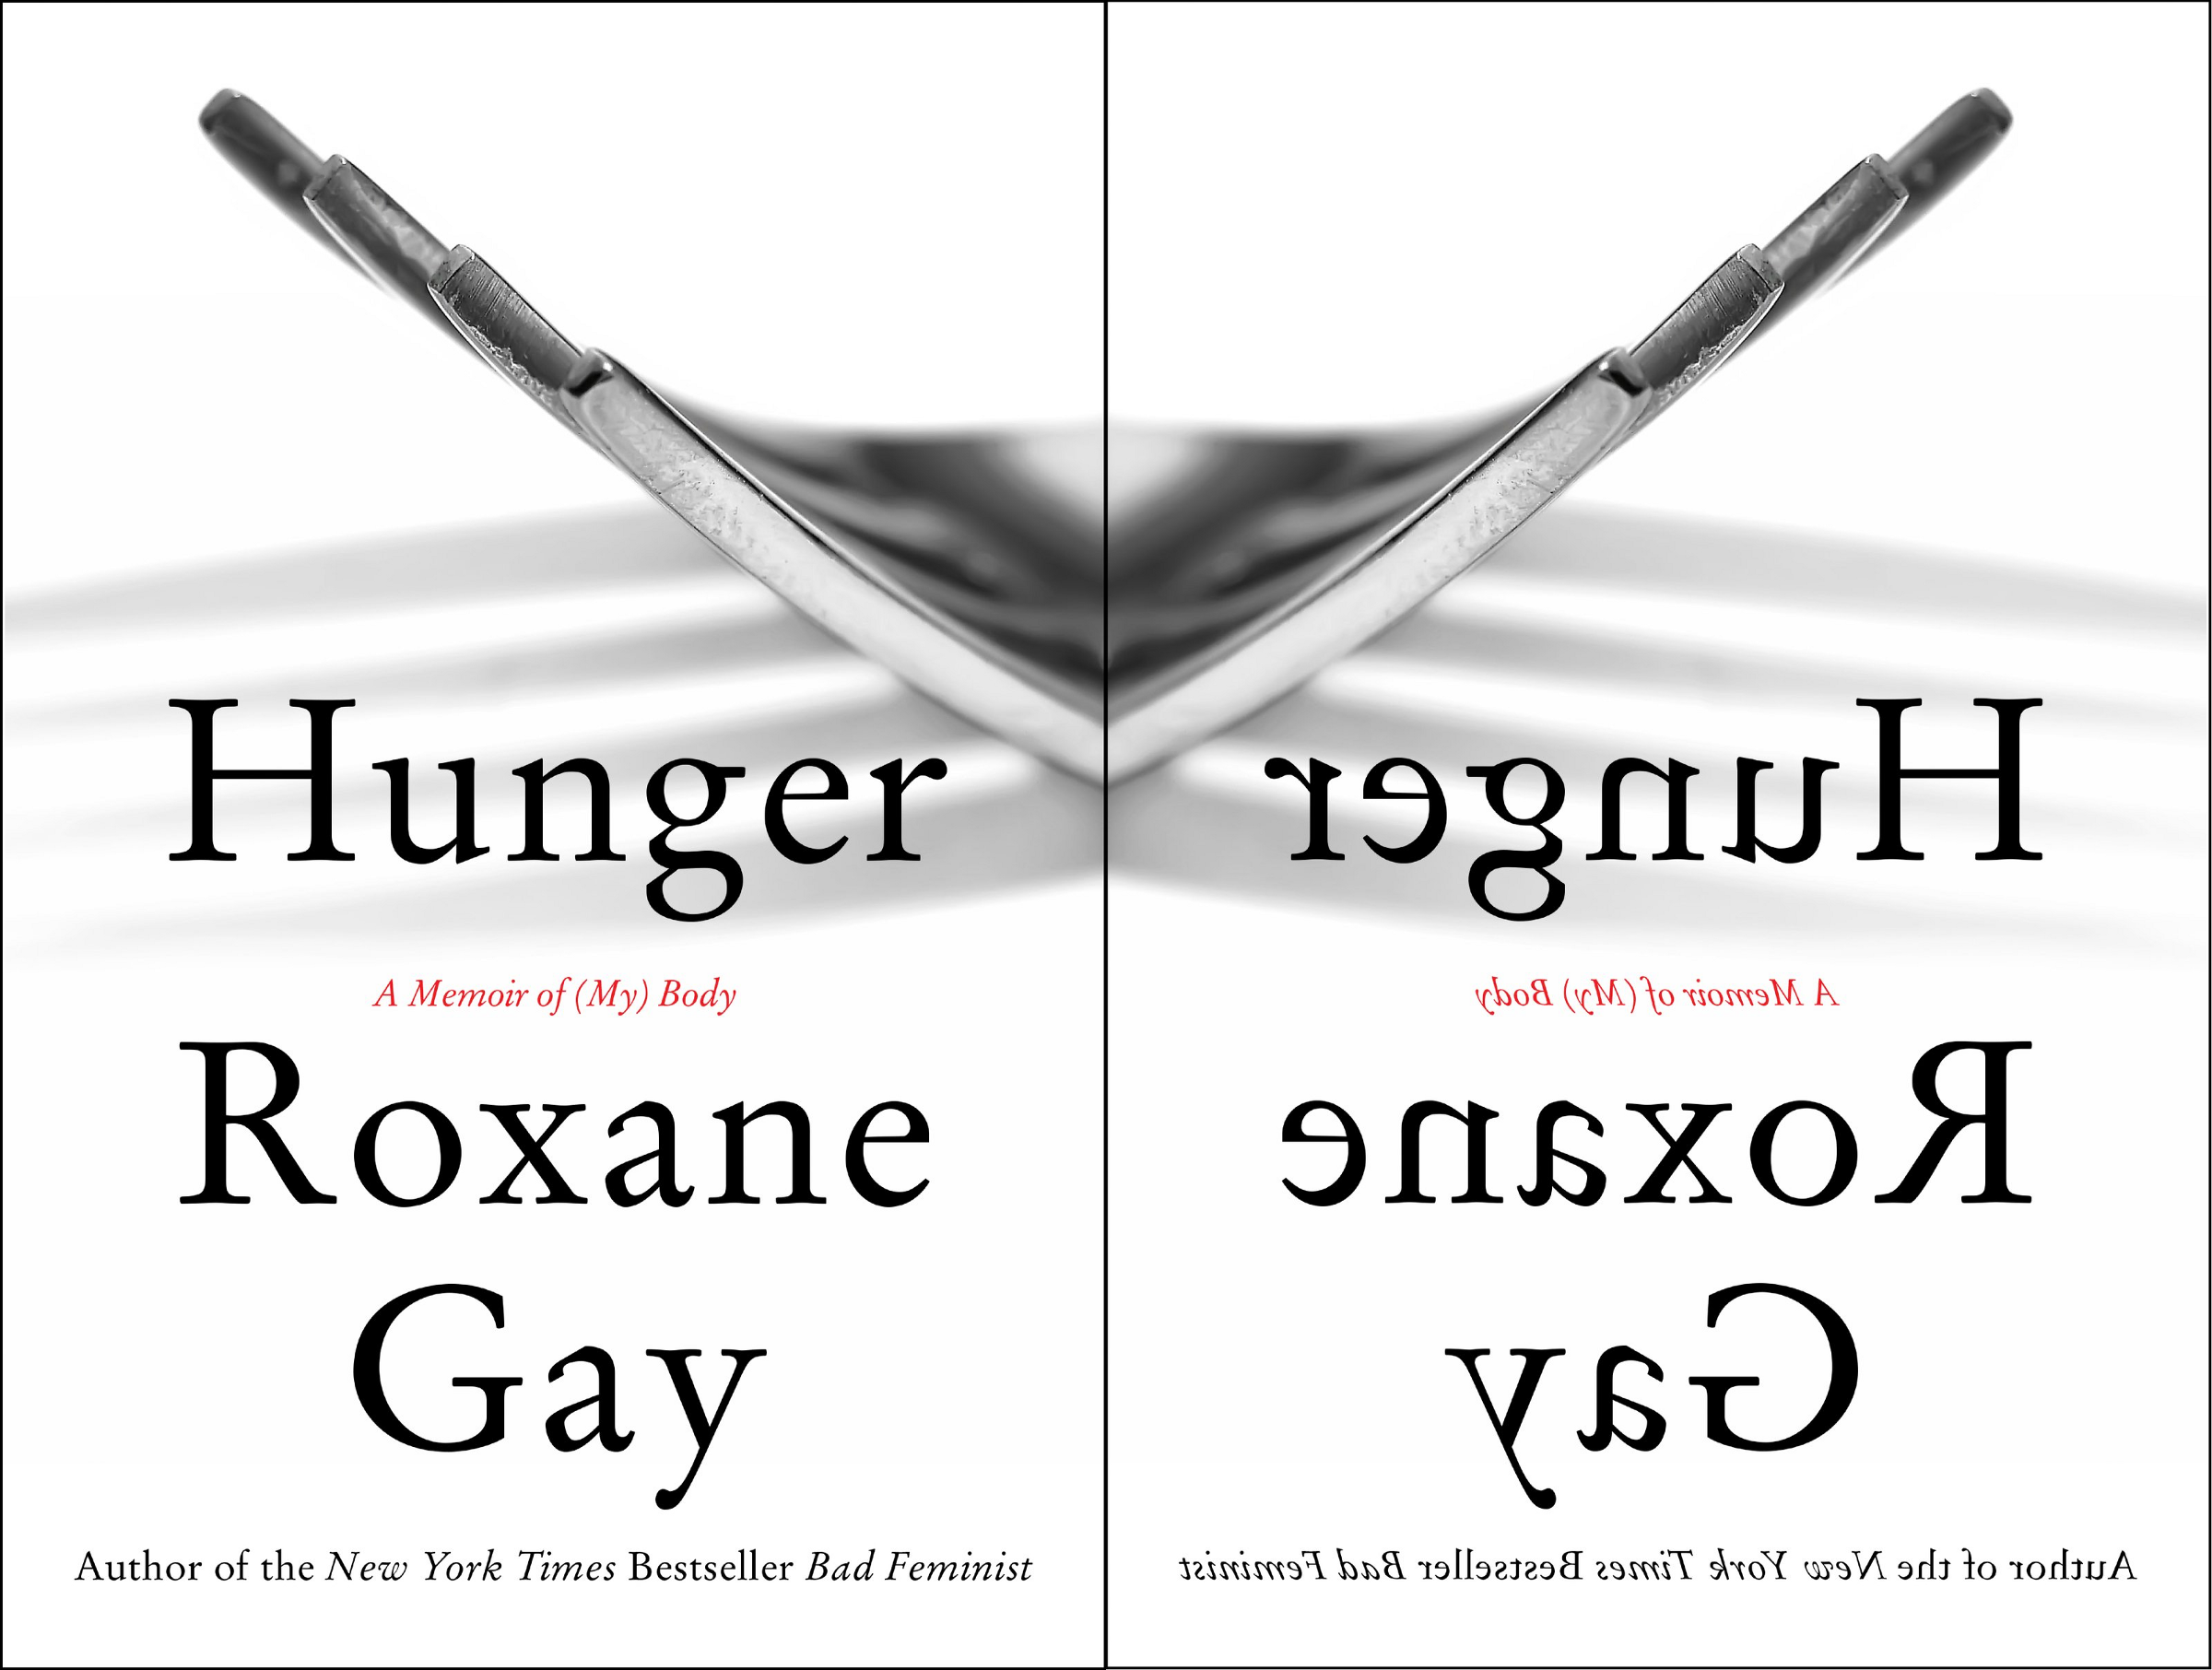 hunger roxane gay part 1 quiz